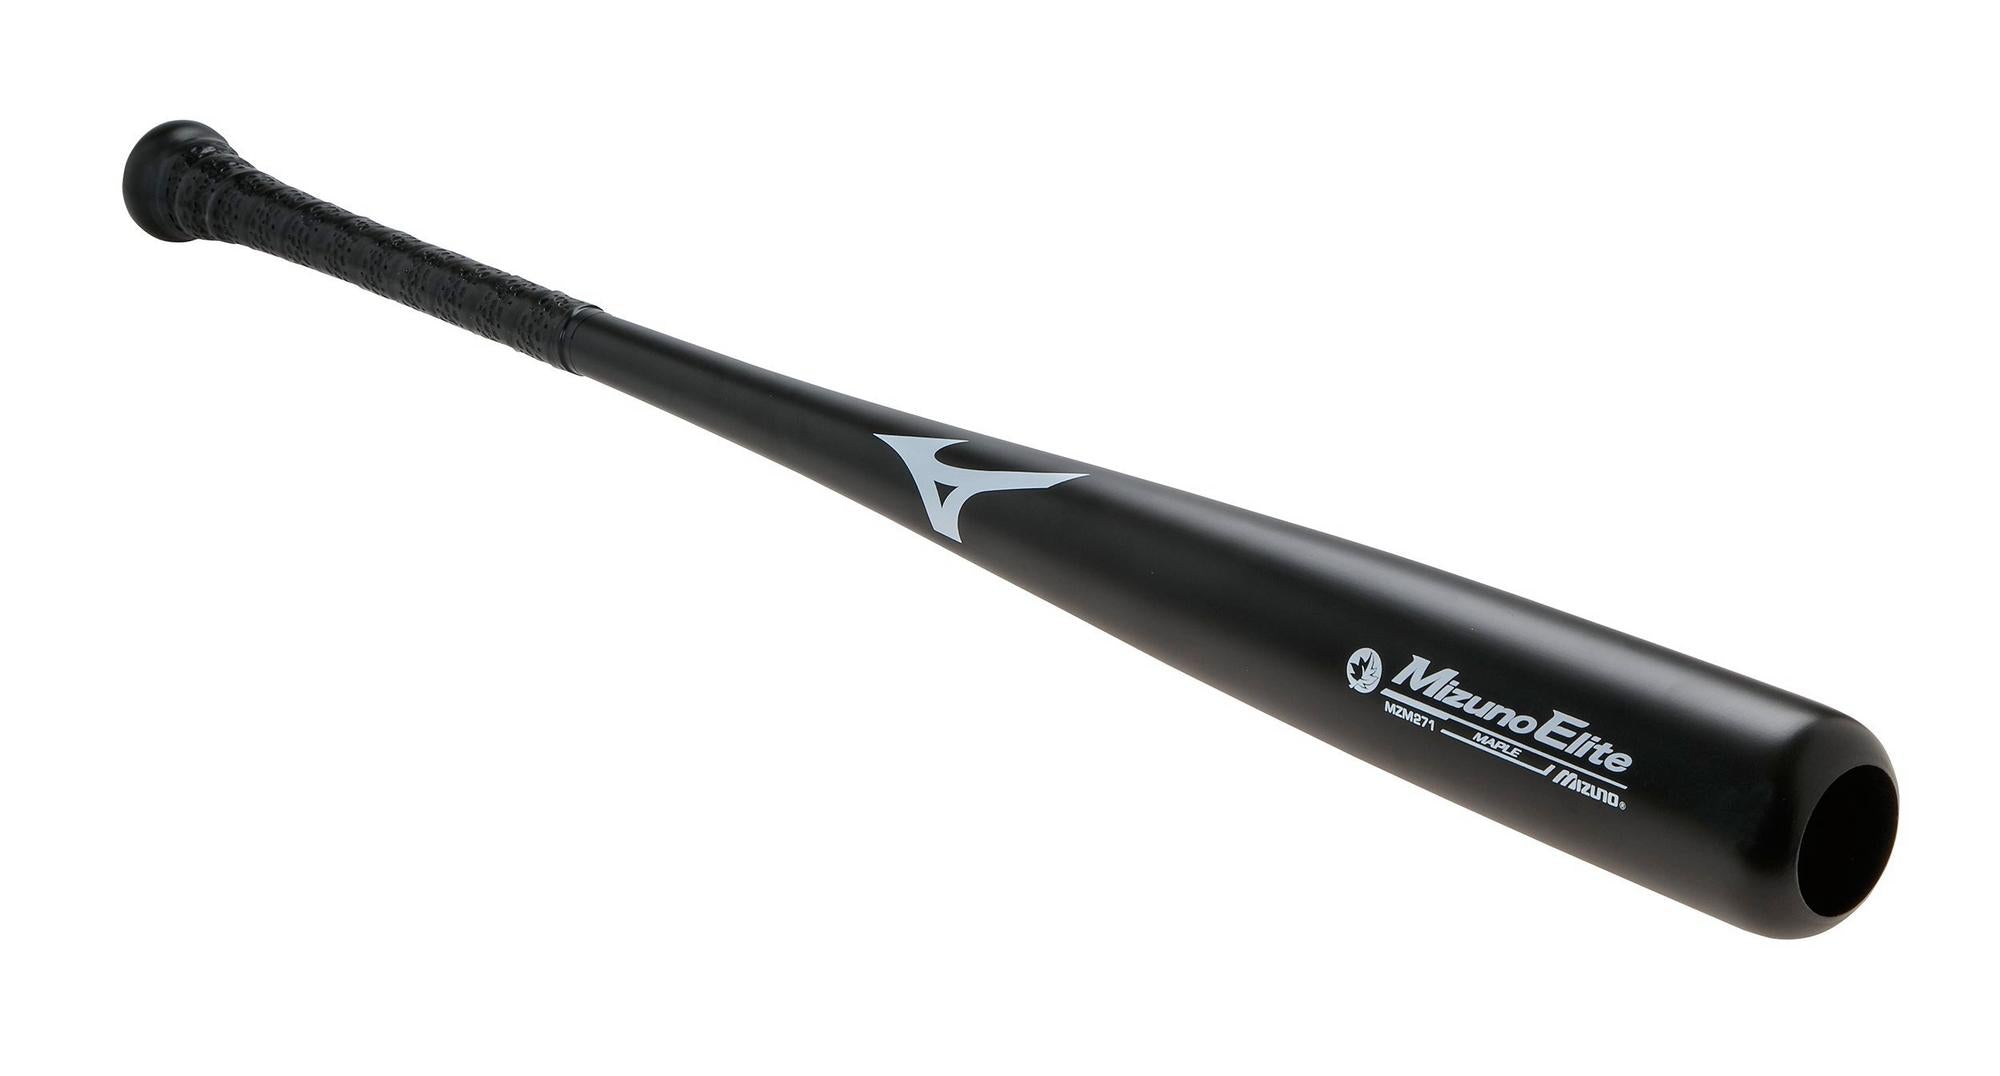 mizuno wood softball bats